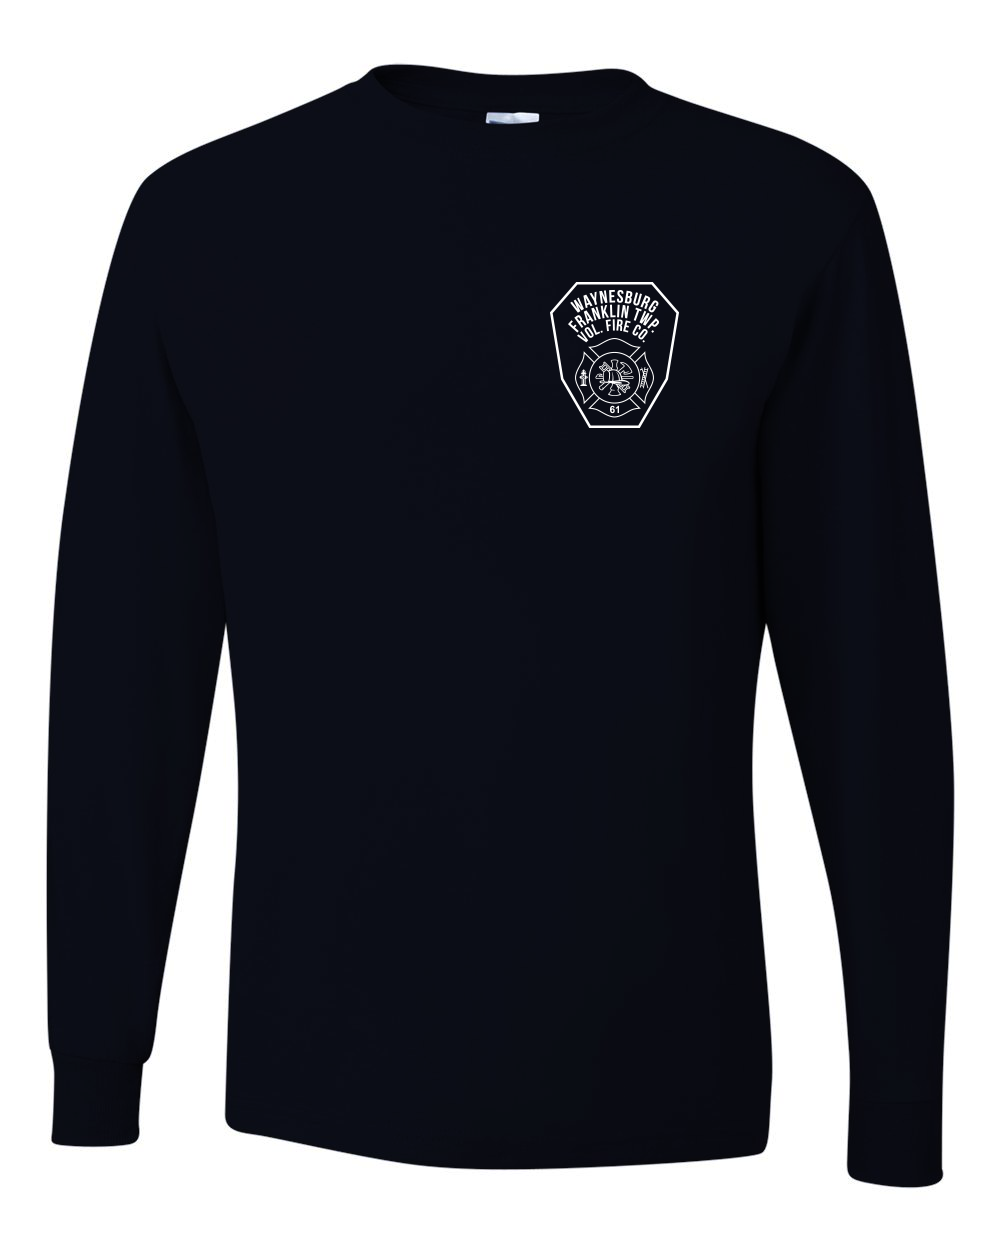 Waynesburg Fire - Dri-Power Long Sleeve 50/50 T-Shirt